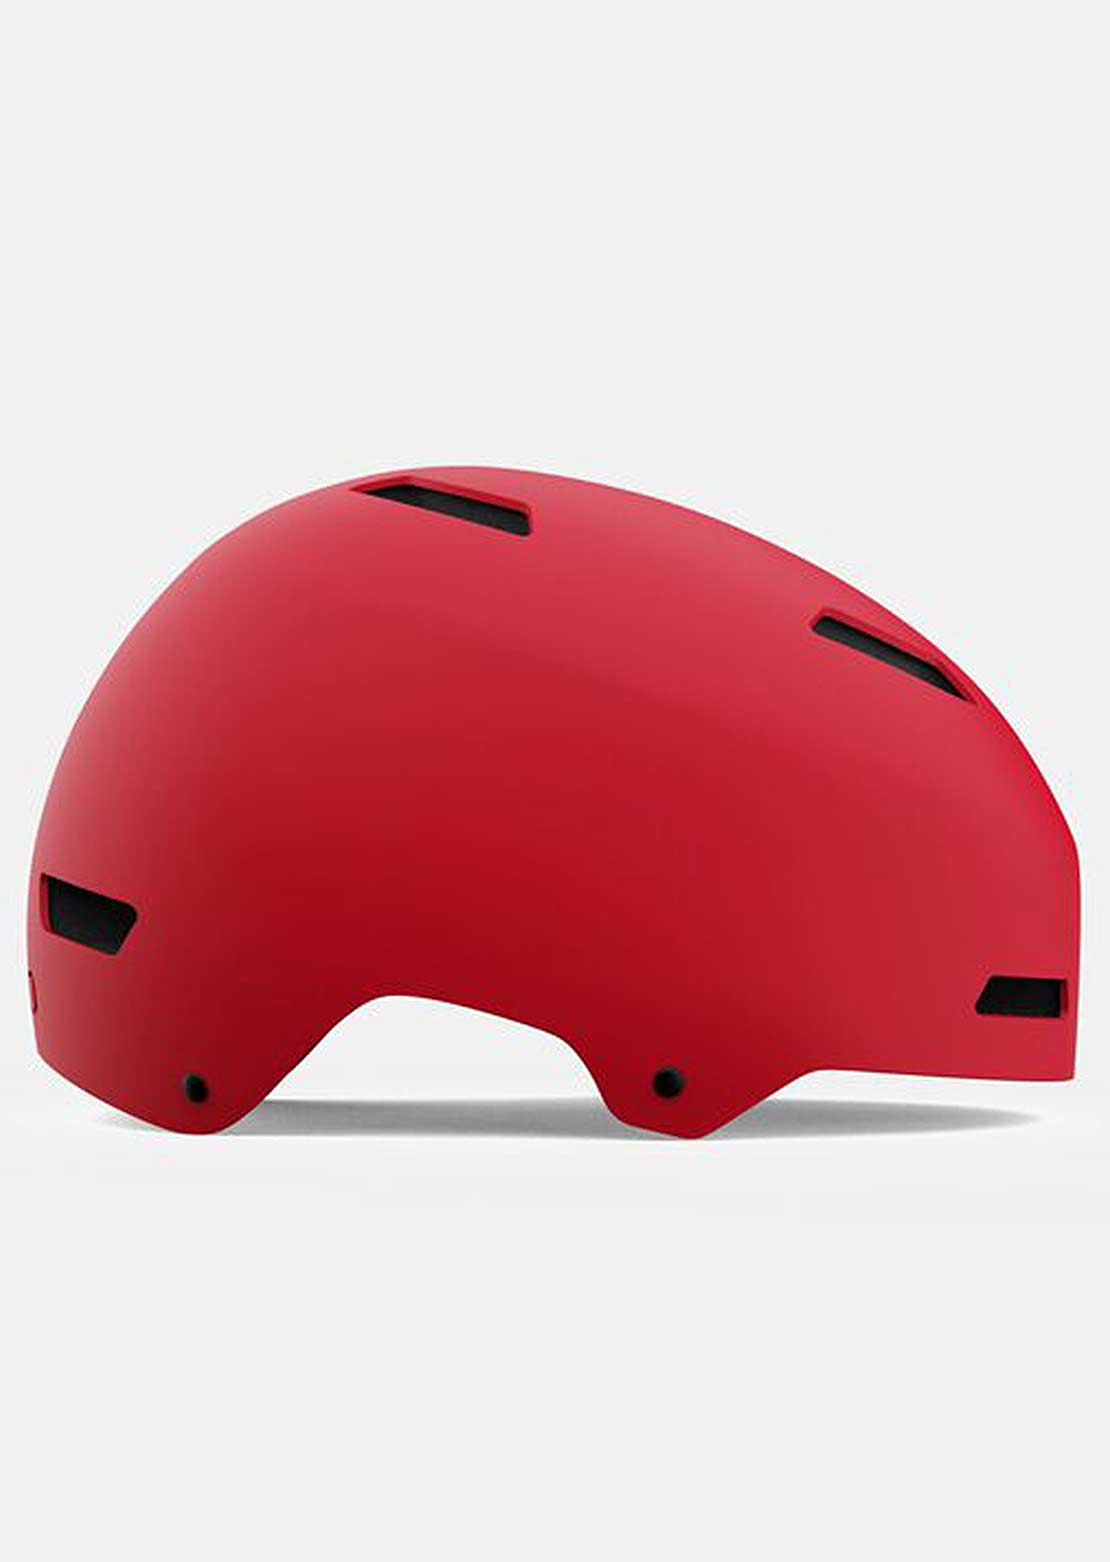 Giro Junior Dime Mountain Bike Helmet Matte Bright Red